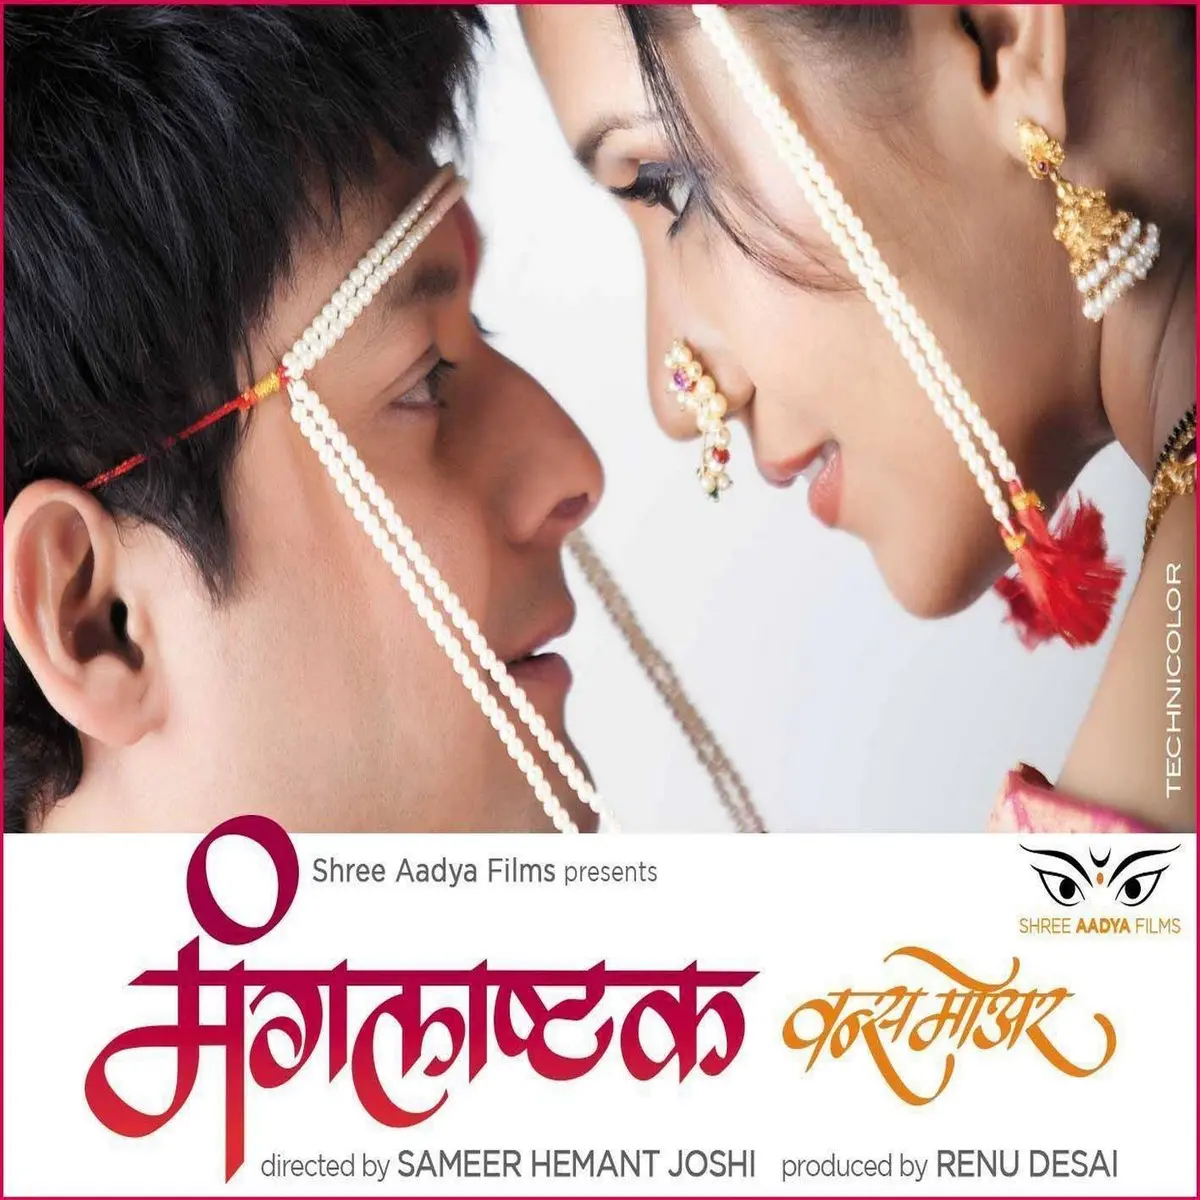 Mangalashtak Once More Songs Download Mangalashtak Once More Mp3 Marathi Songs Online Free On Gaana Com